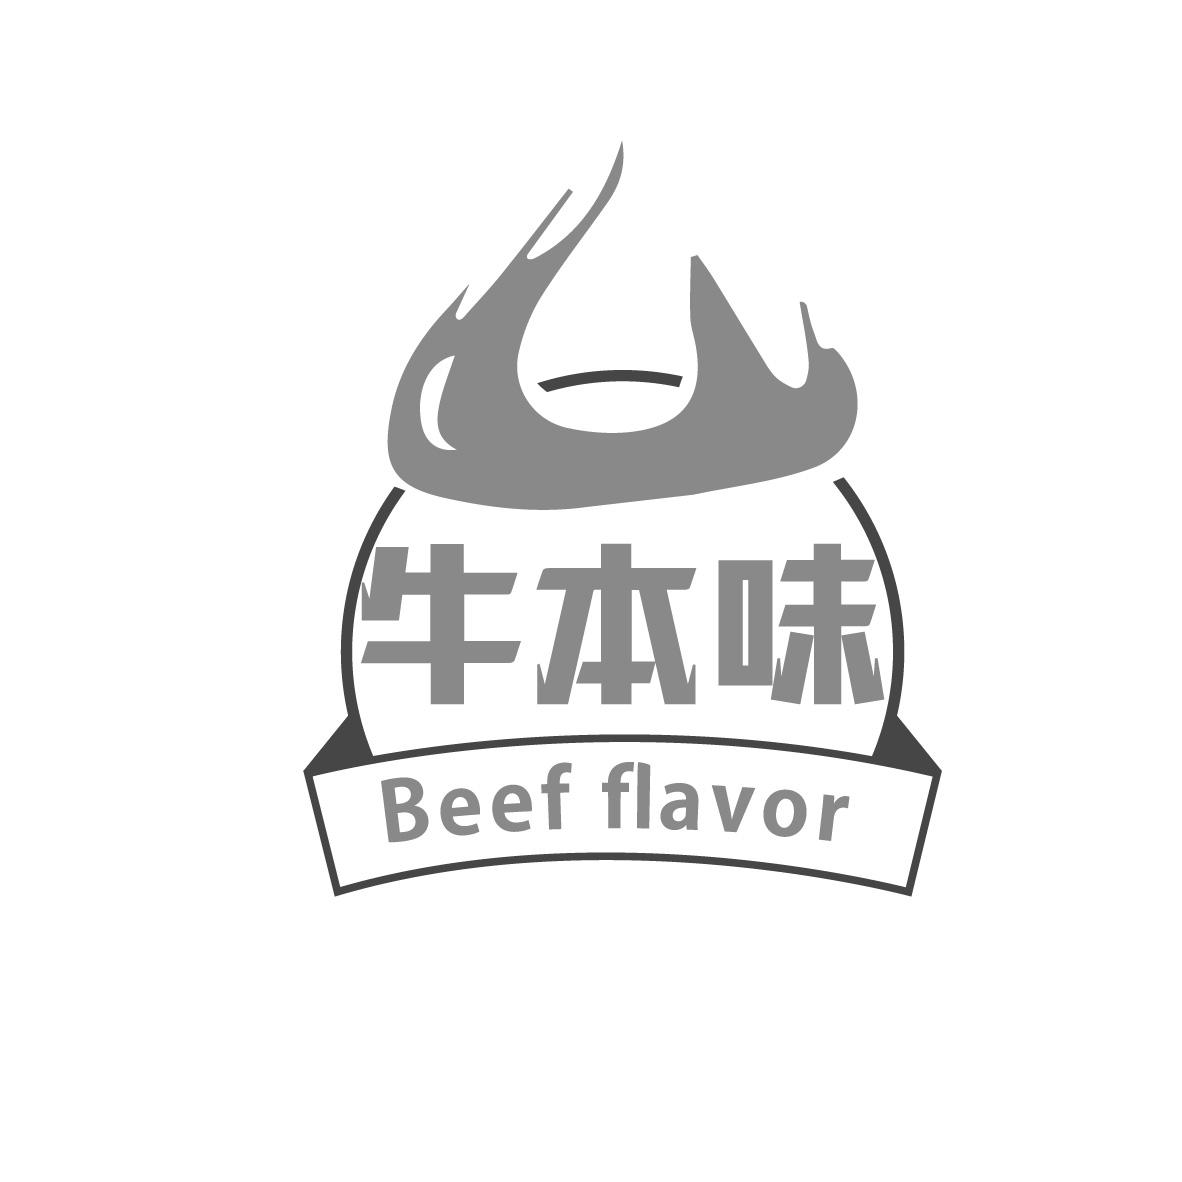 29类-食品牛本味 BEEF FLAVOR商标转让